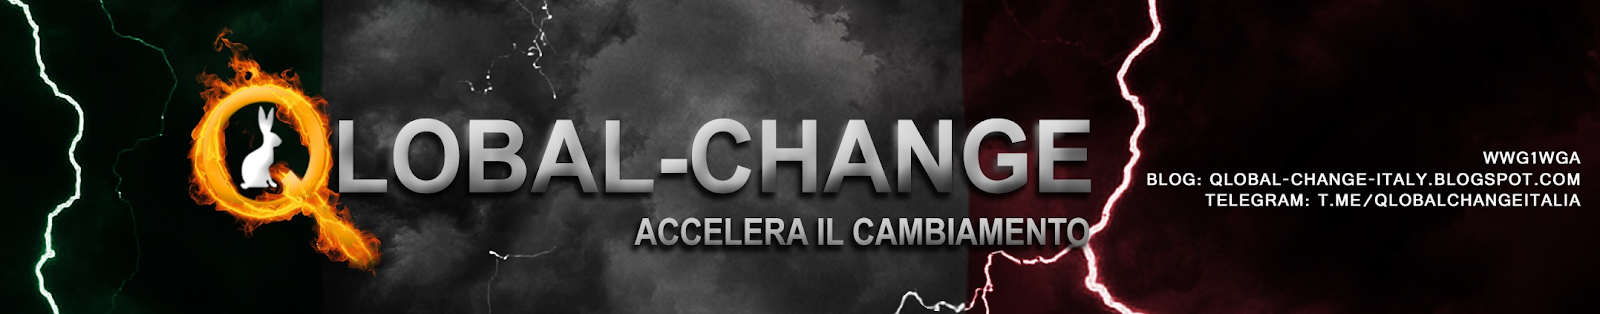 Qlobal-Change-Italia